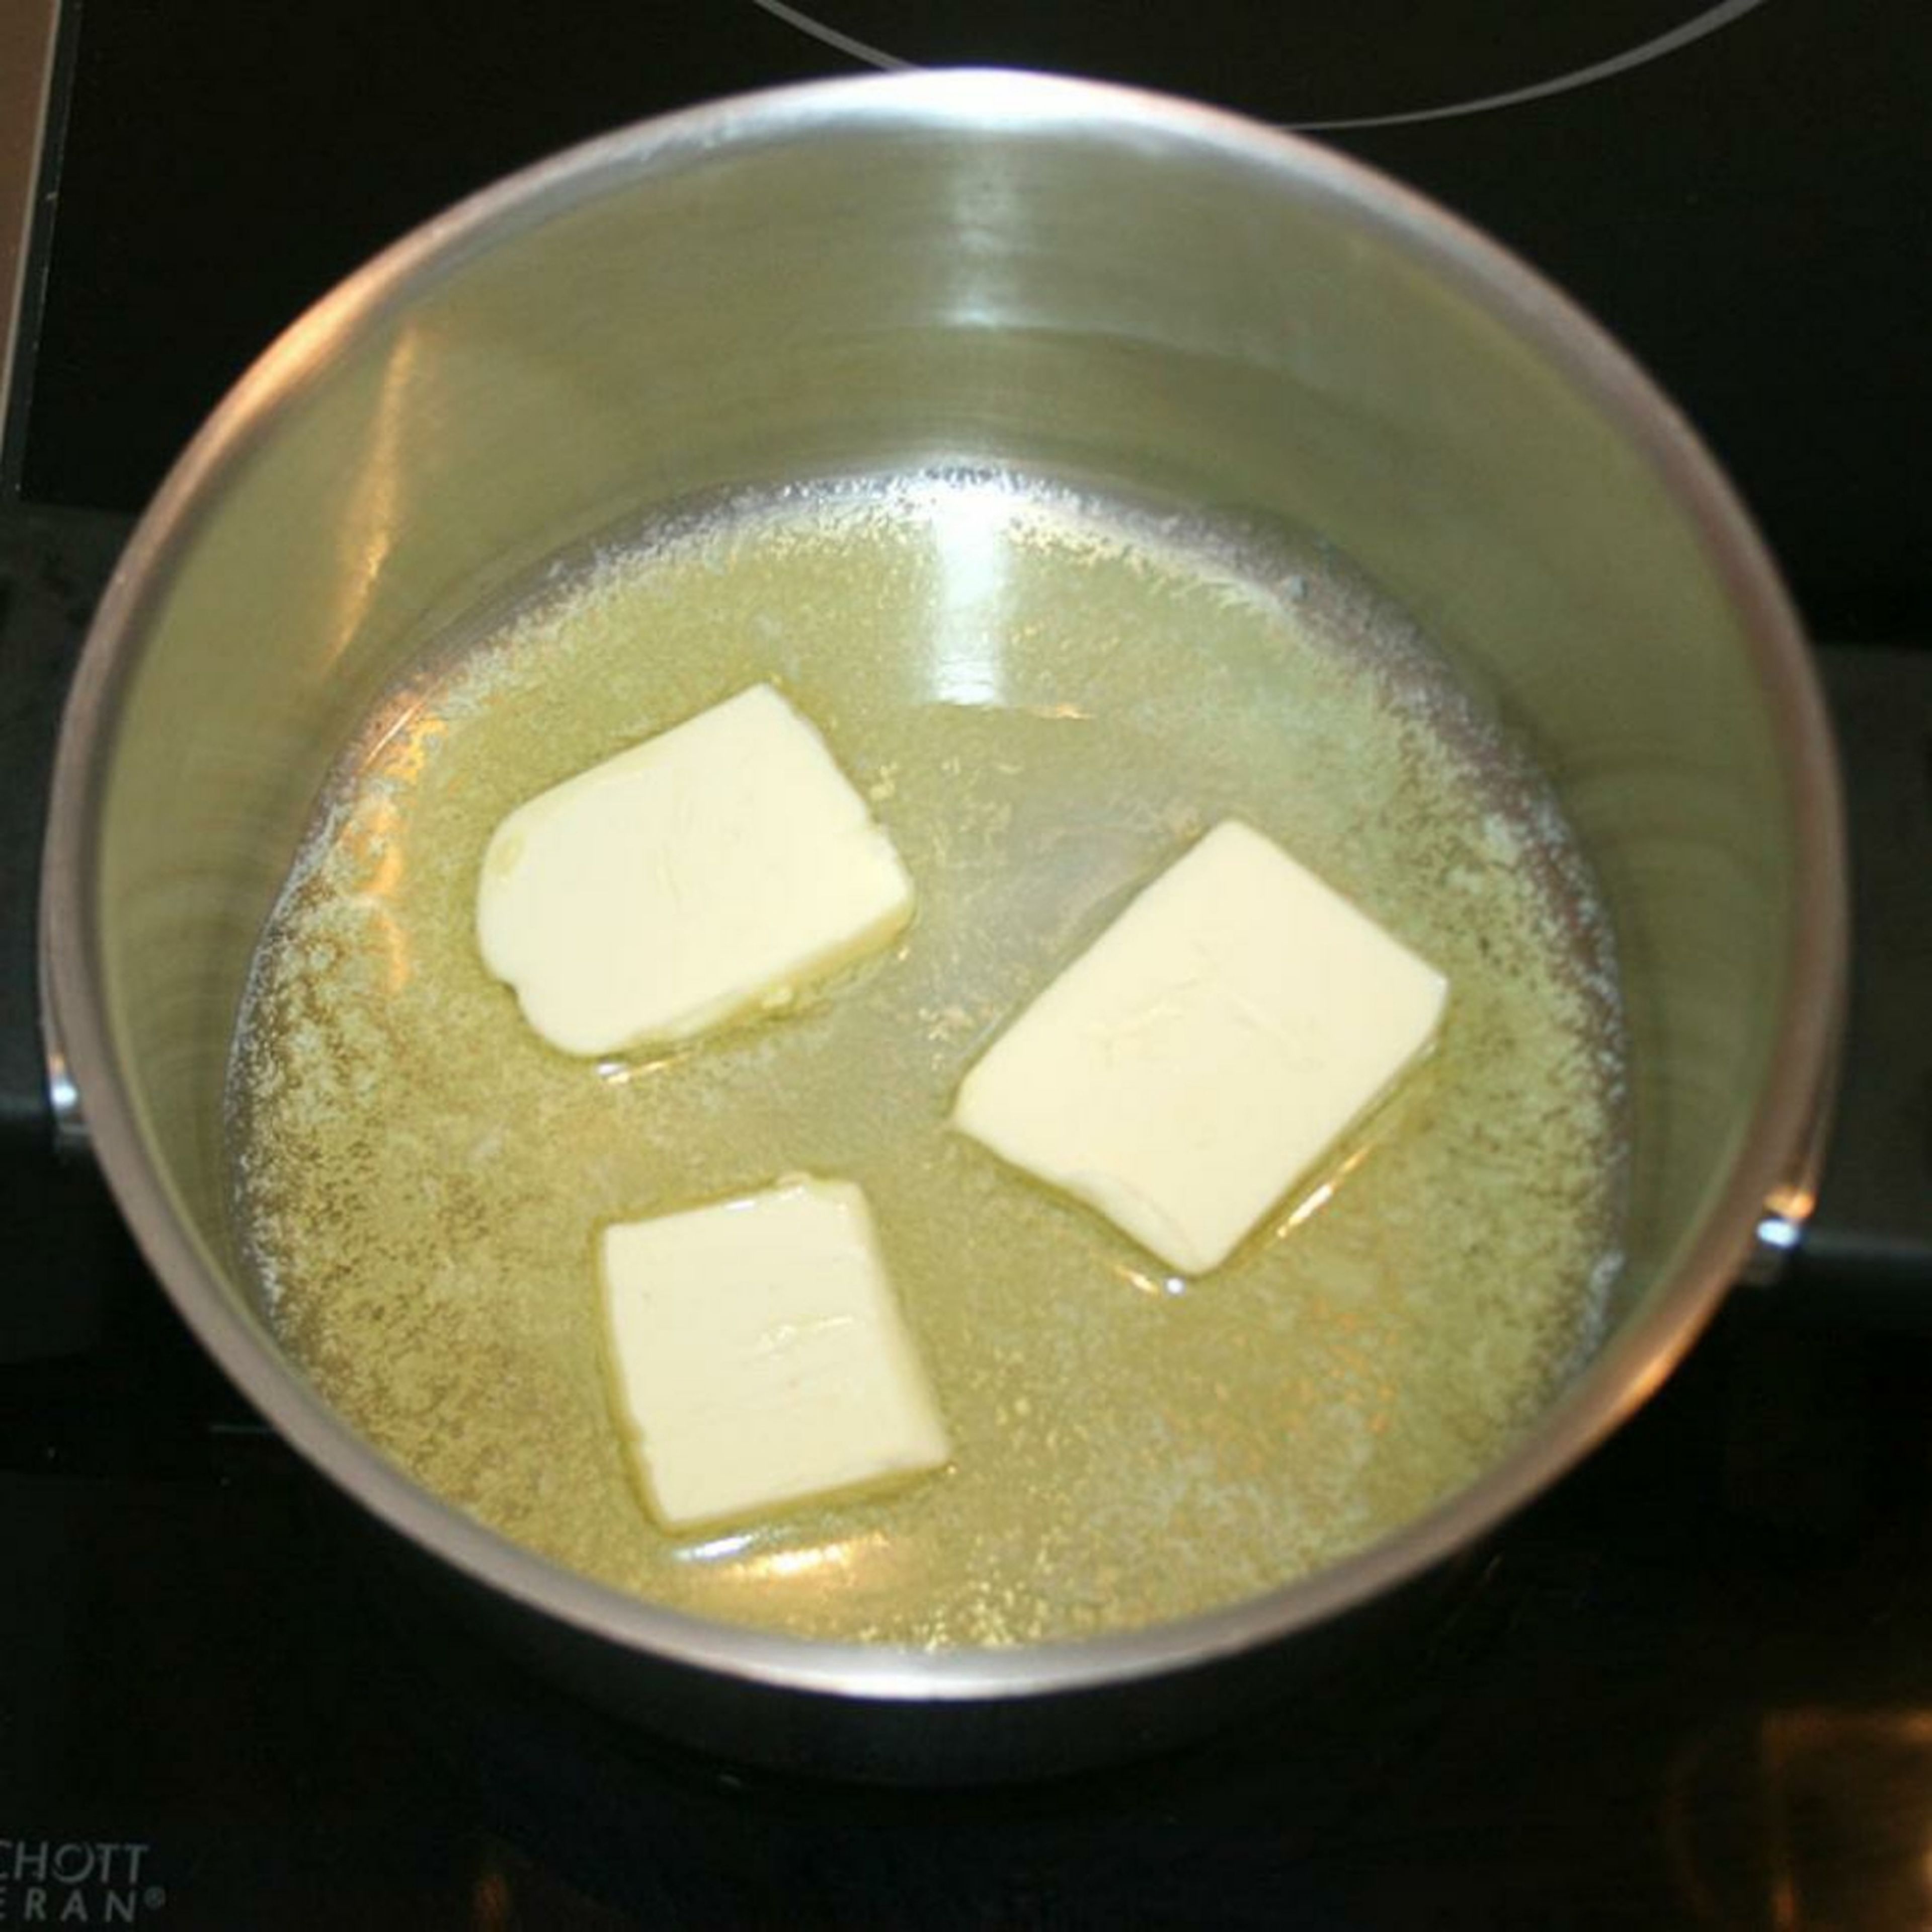 Den Butter schmelzen (wenn noch nicht geschehen)